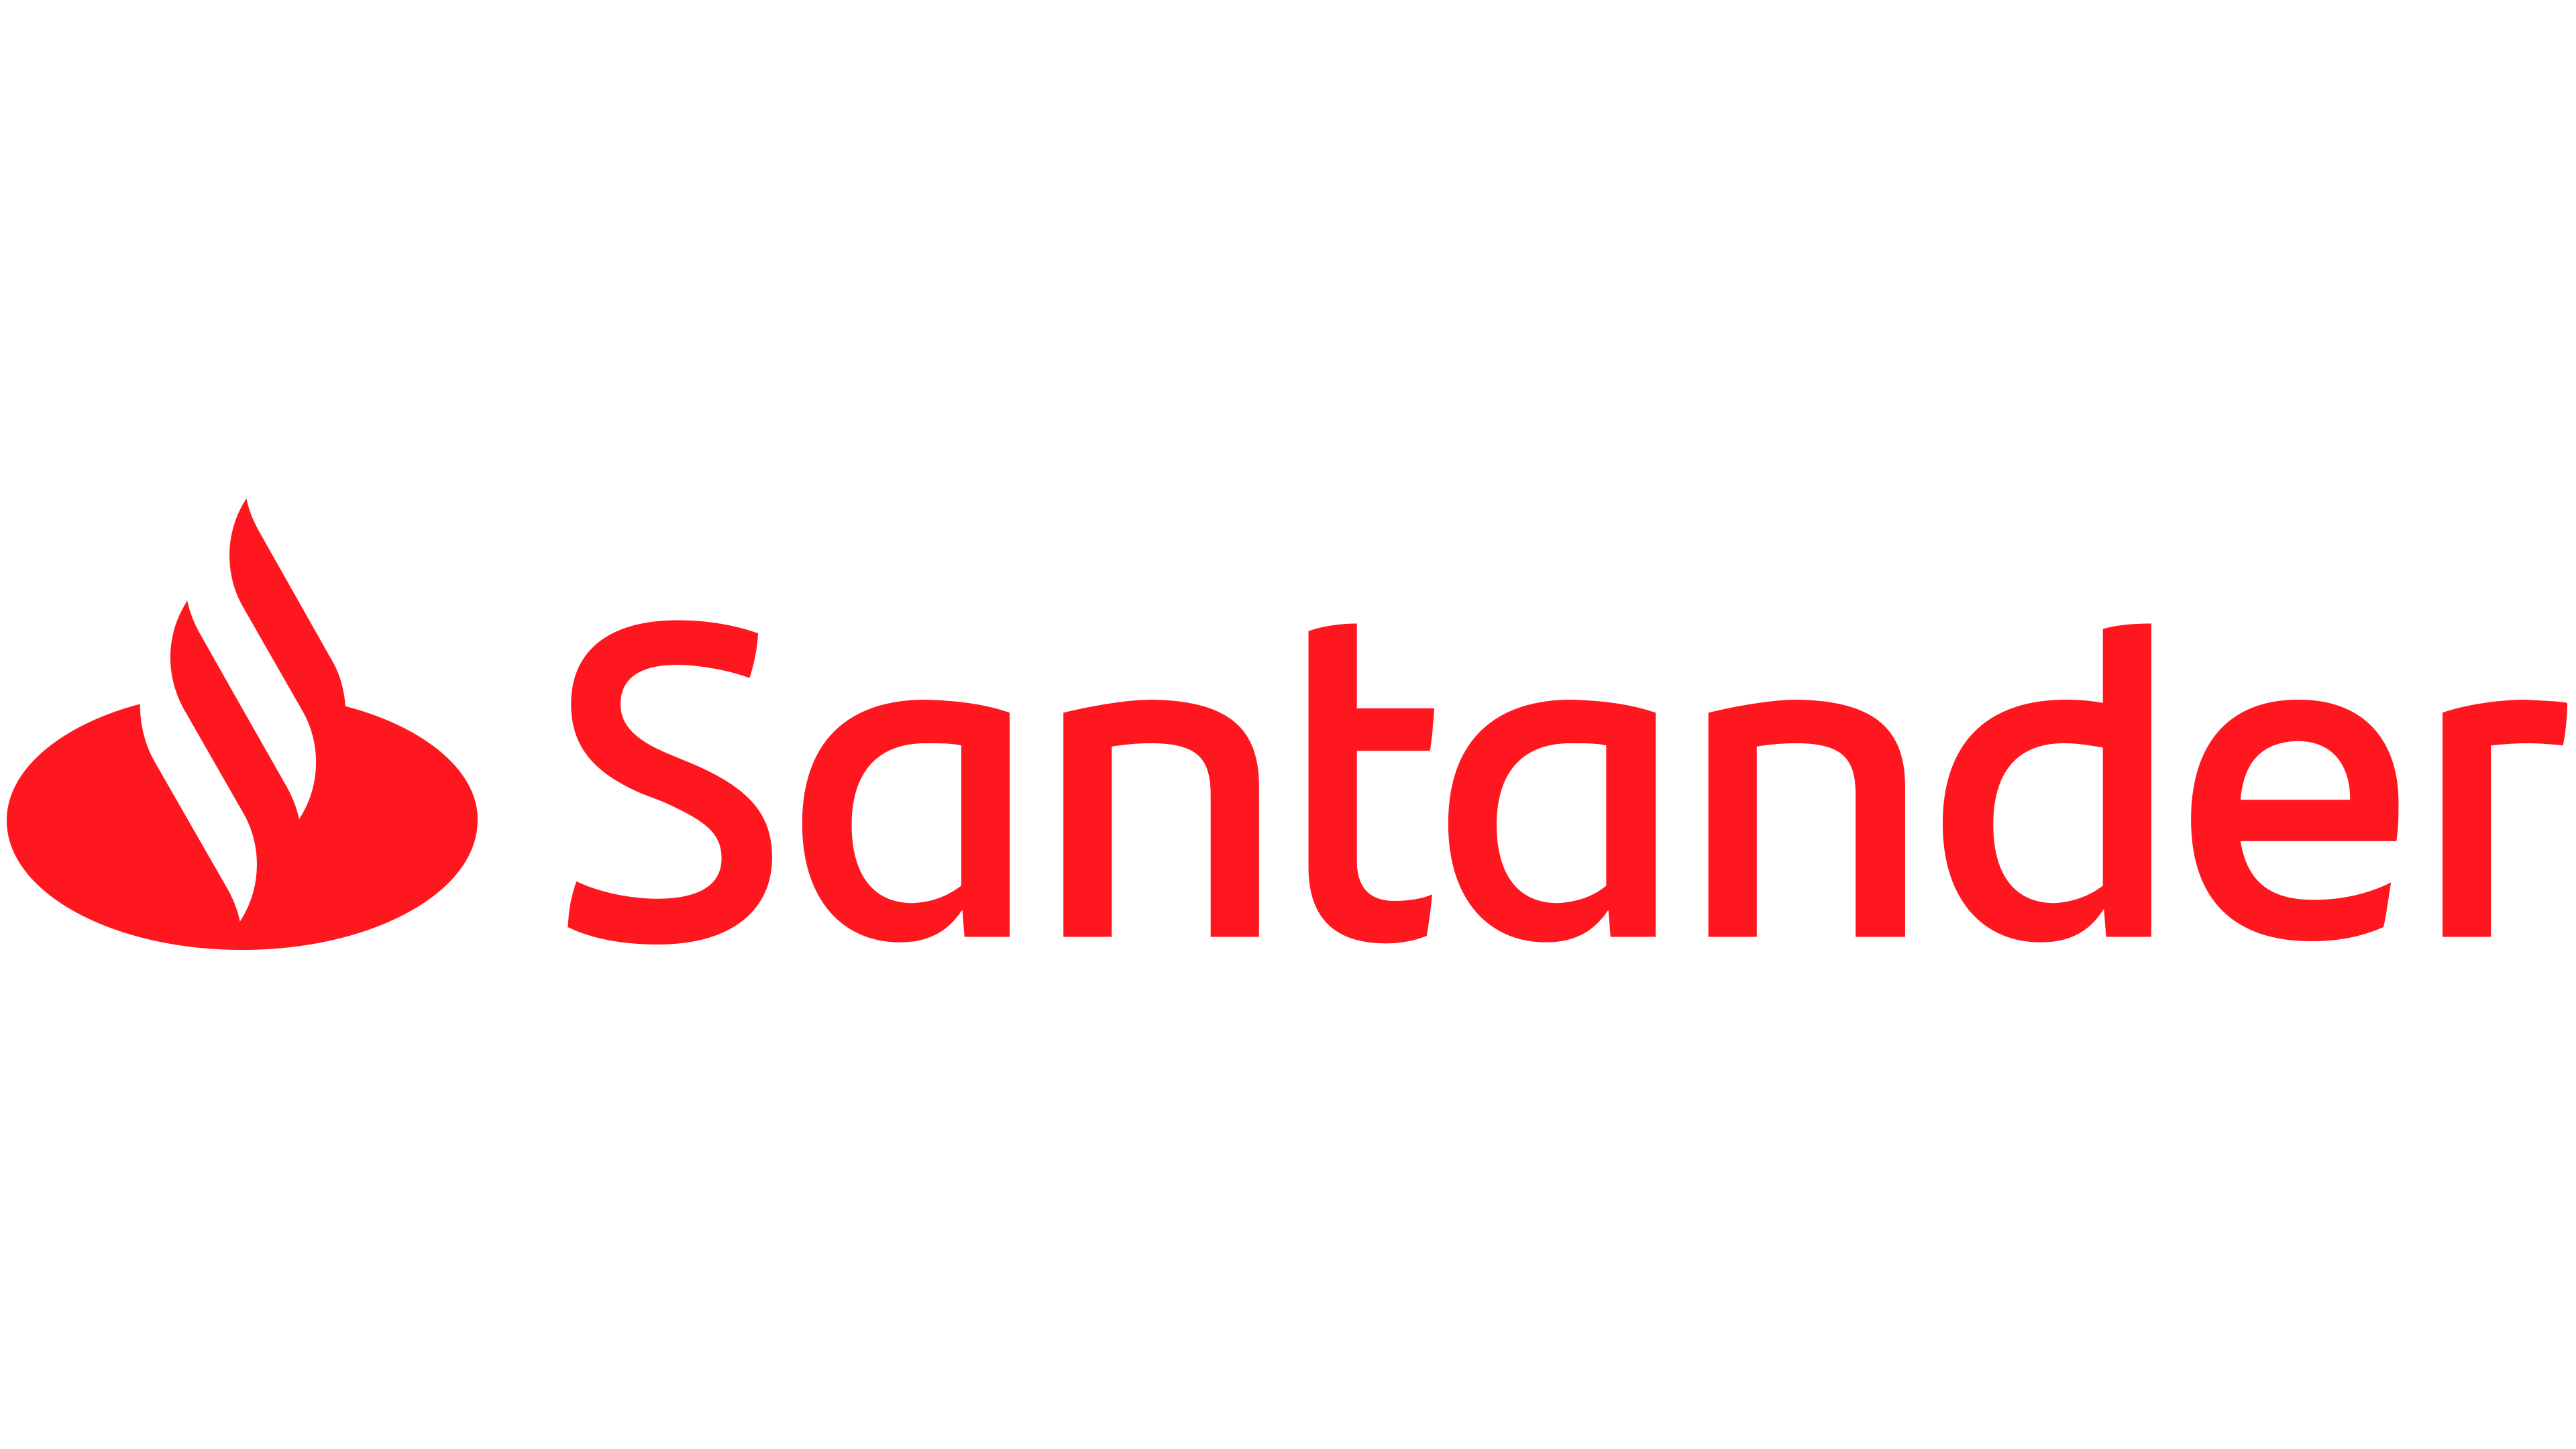 Vale a pena investir com o Banco Santander? Fonte: Santander.